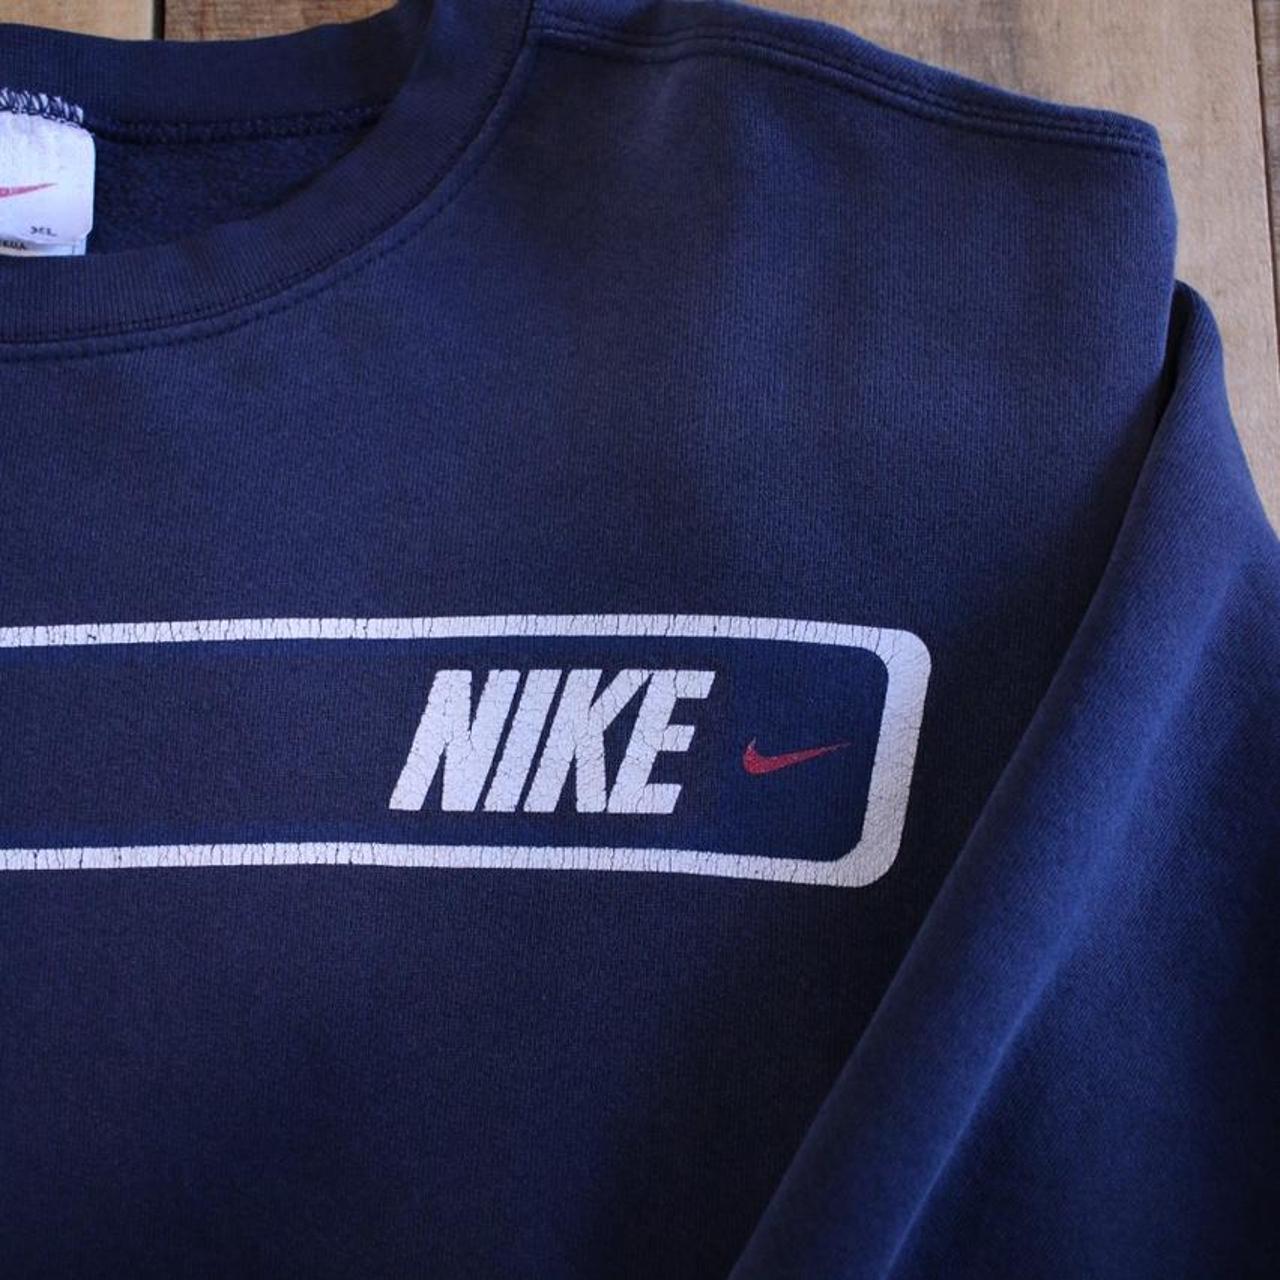 Product Image 2 - Vintage Nike Sweatshirt

Size XL

No major